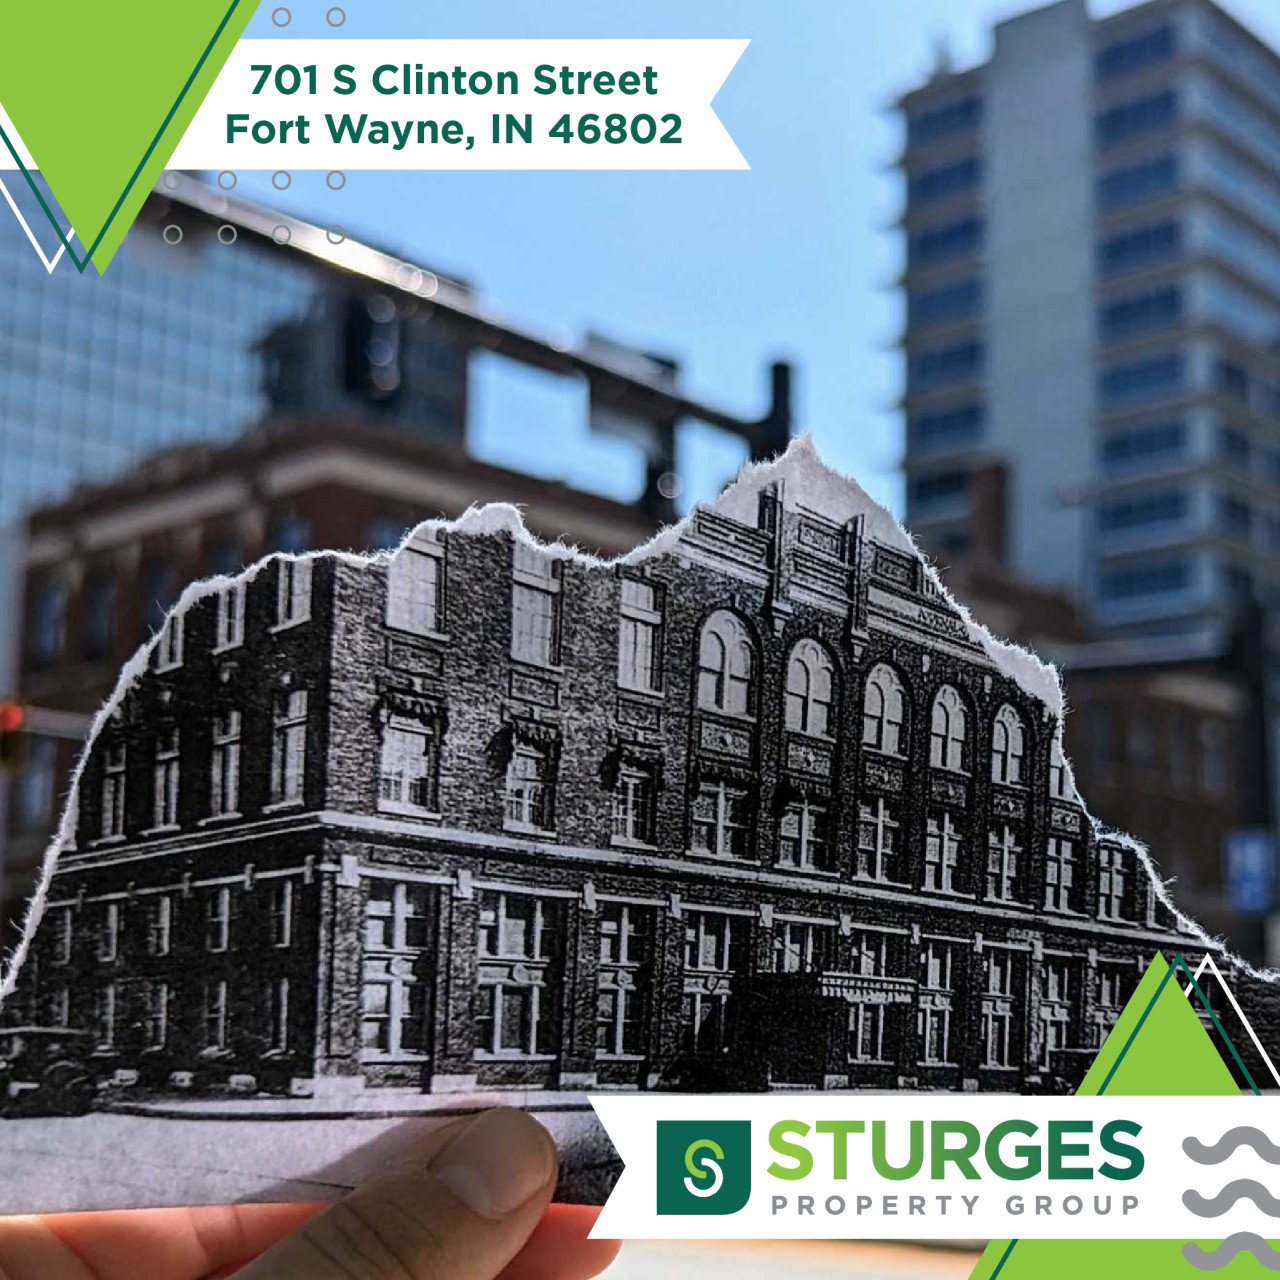 Sturges Property Group - Journal-Gazette Building, 701 S Clinton St, Fort Wayne, IN 46802